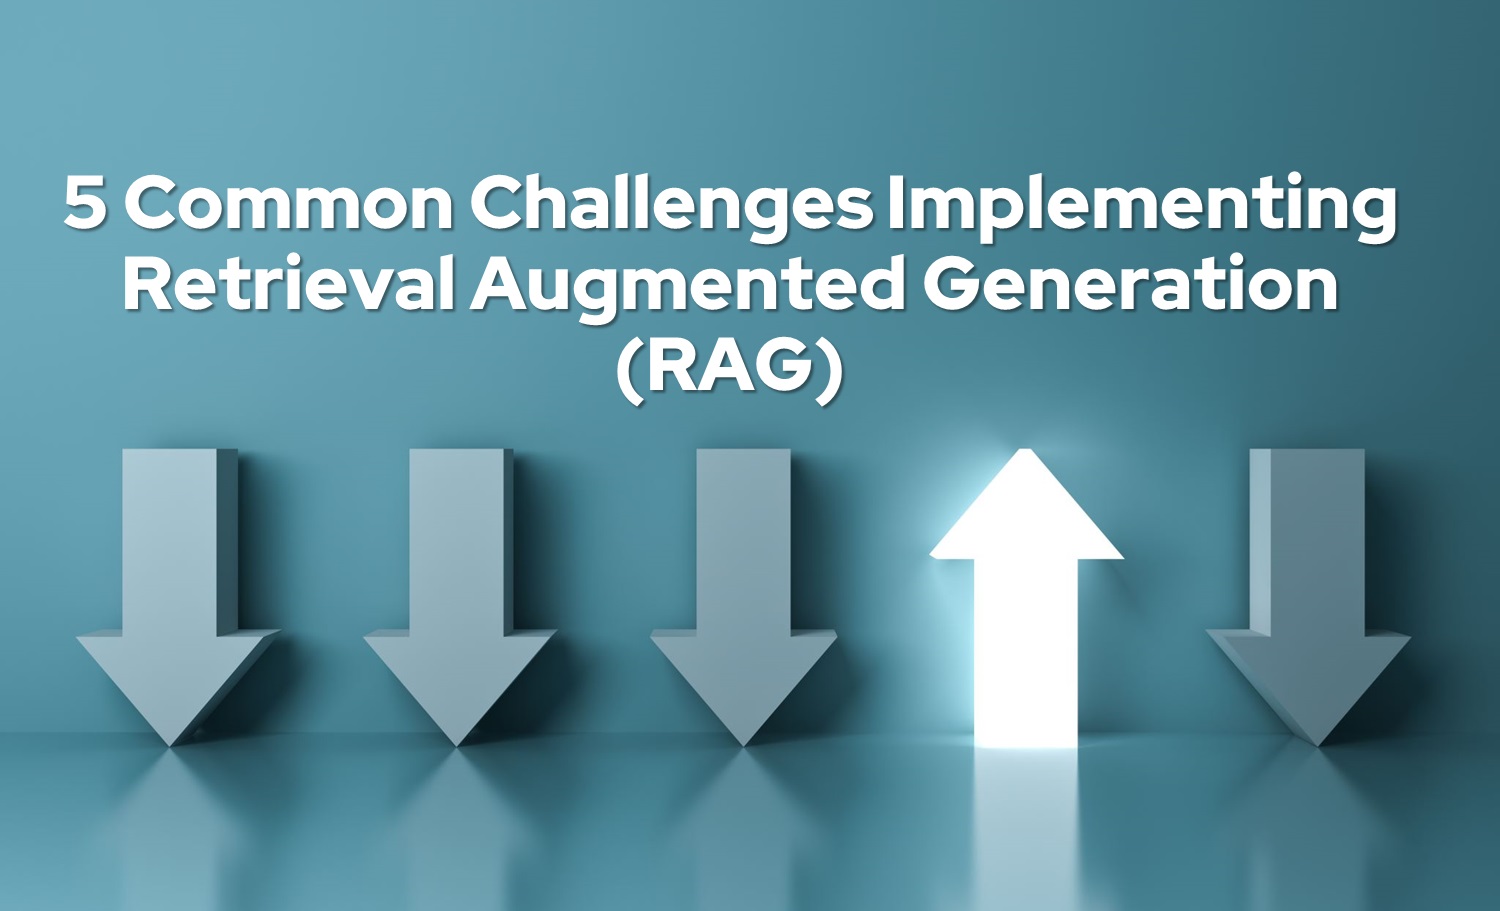 How to Evaluate Retrieval Augmented Generation (RAG) Applications